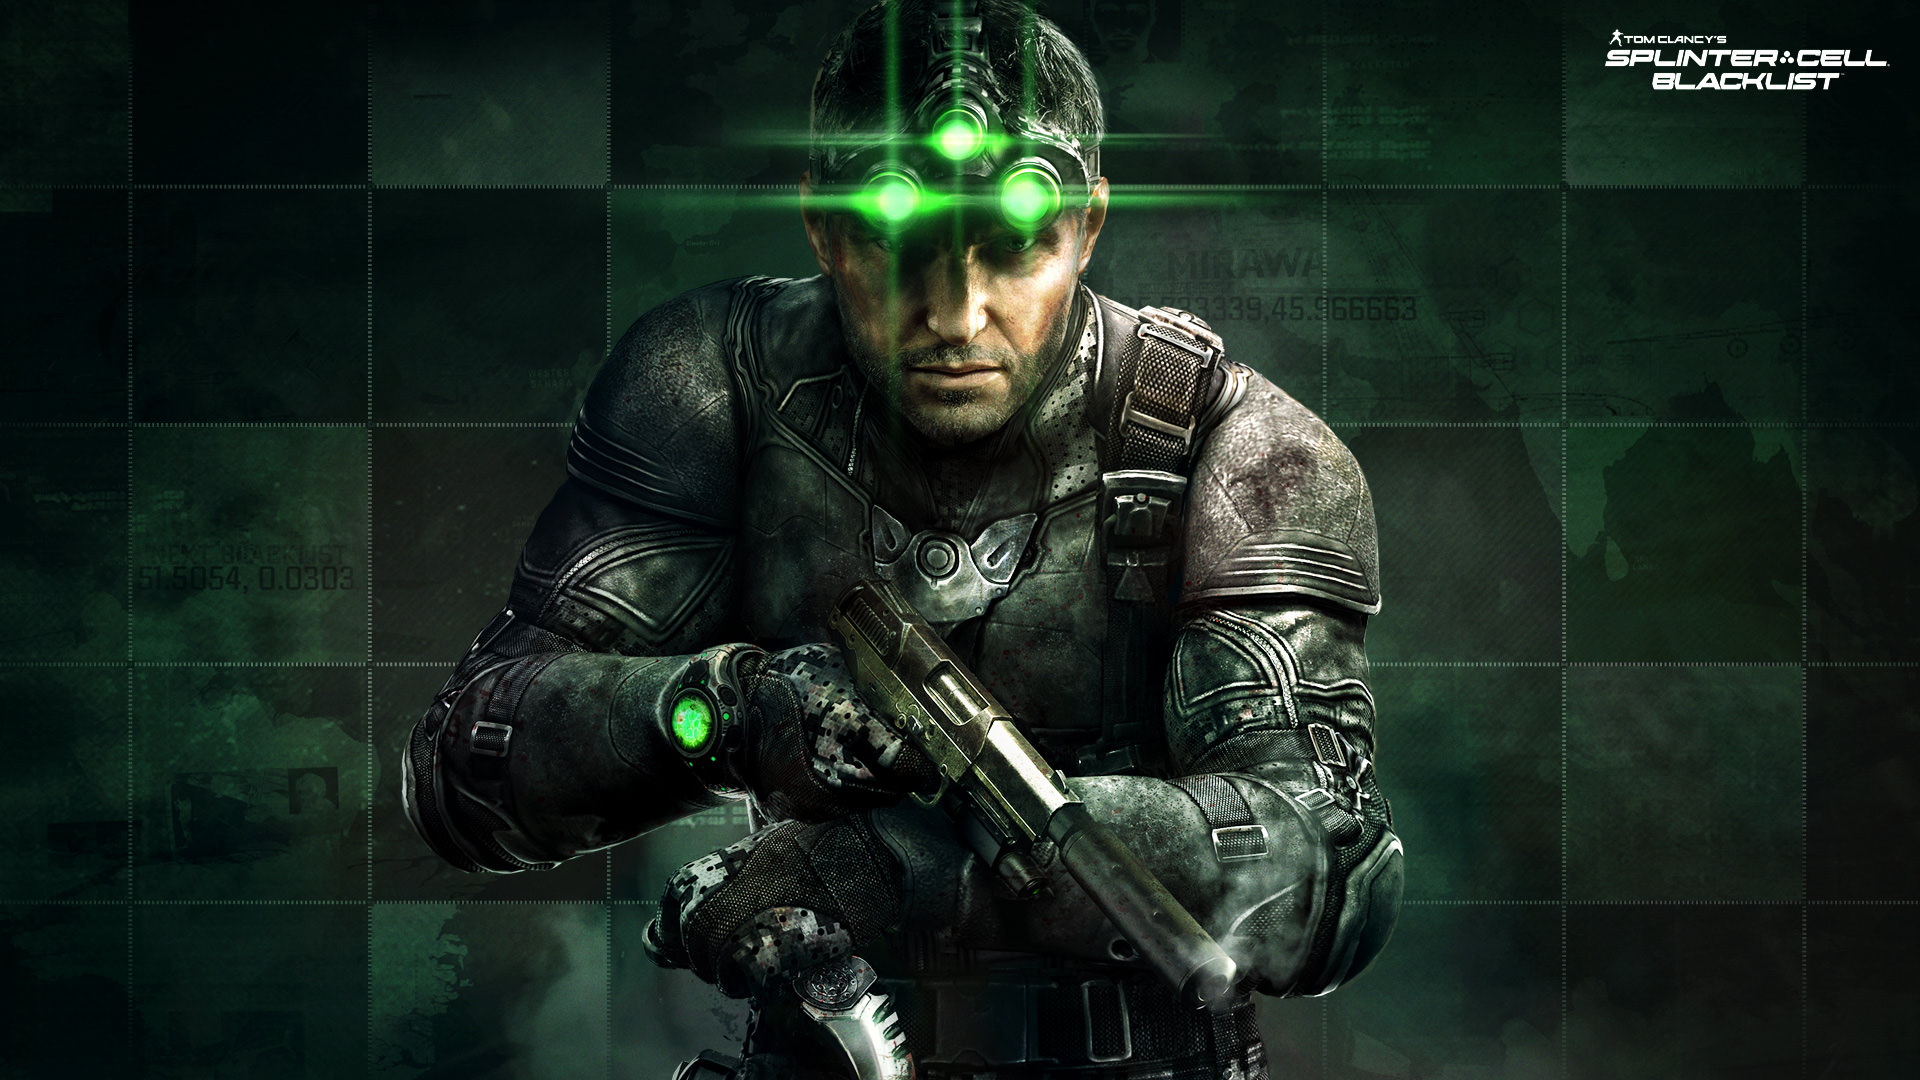 Tom Clancys Splinter Cell: Blacklist PC Game Free Download 12.5 GB